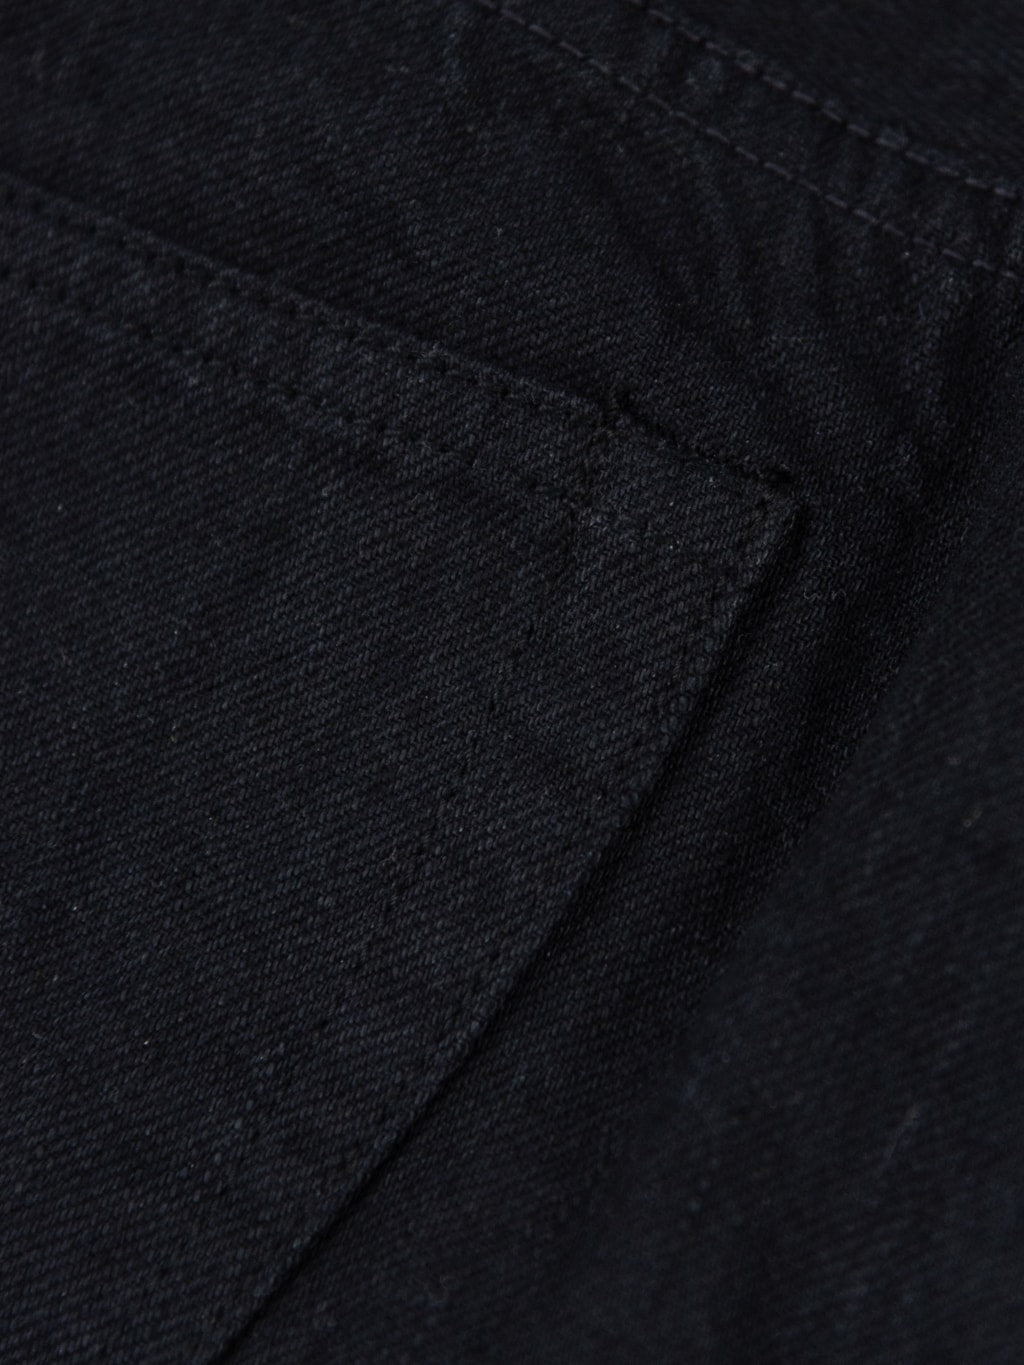 Sugar Cane Type III 13oz Black Denim Slim Jeans hidden rivet